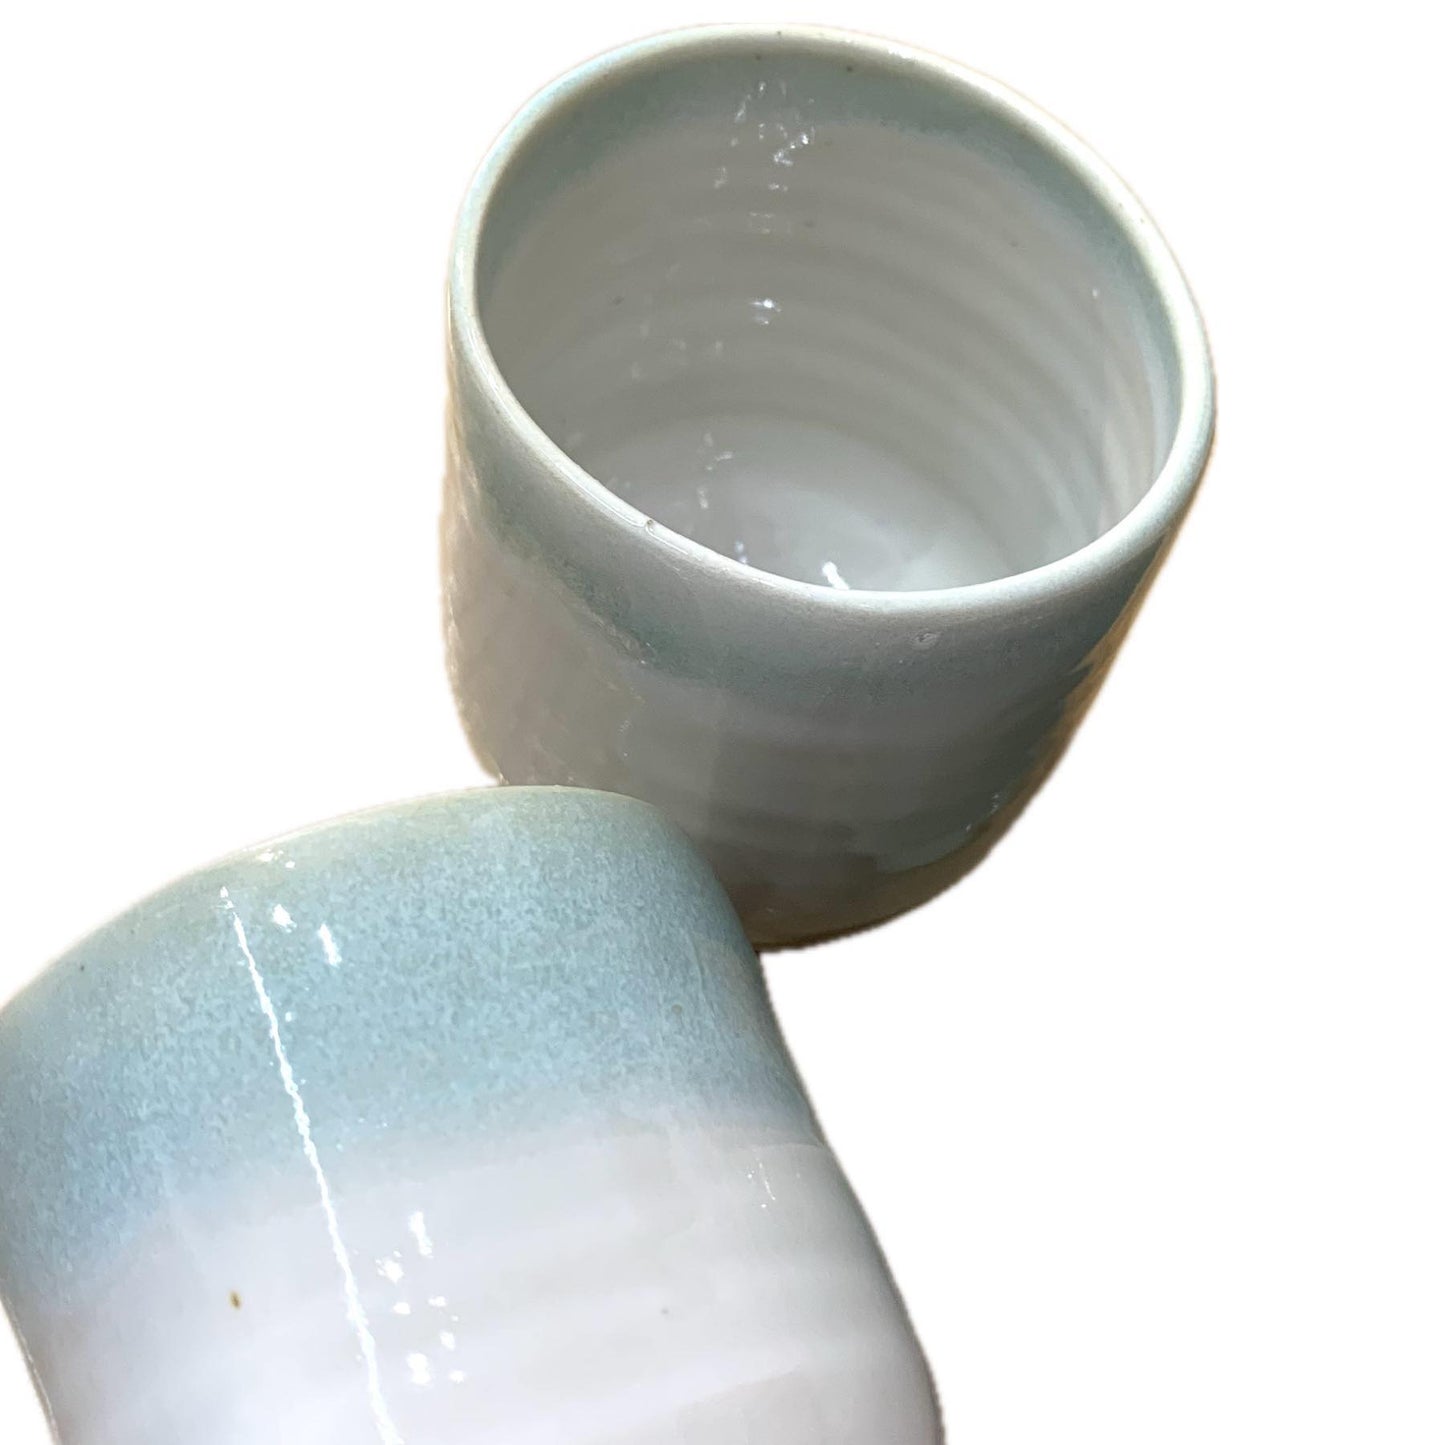 EARTH BY HAND- Espresso/Piccolo Cups- White Clay with Blue Rims